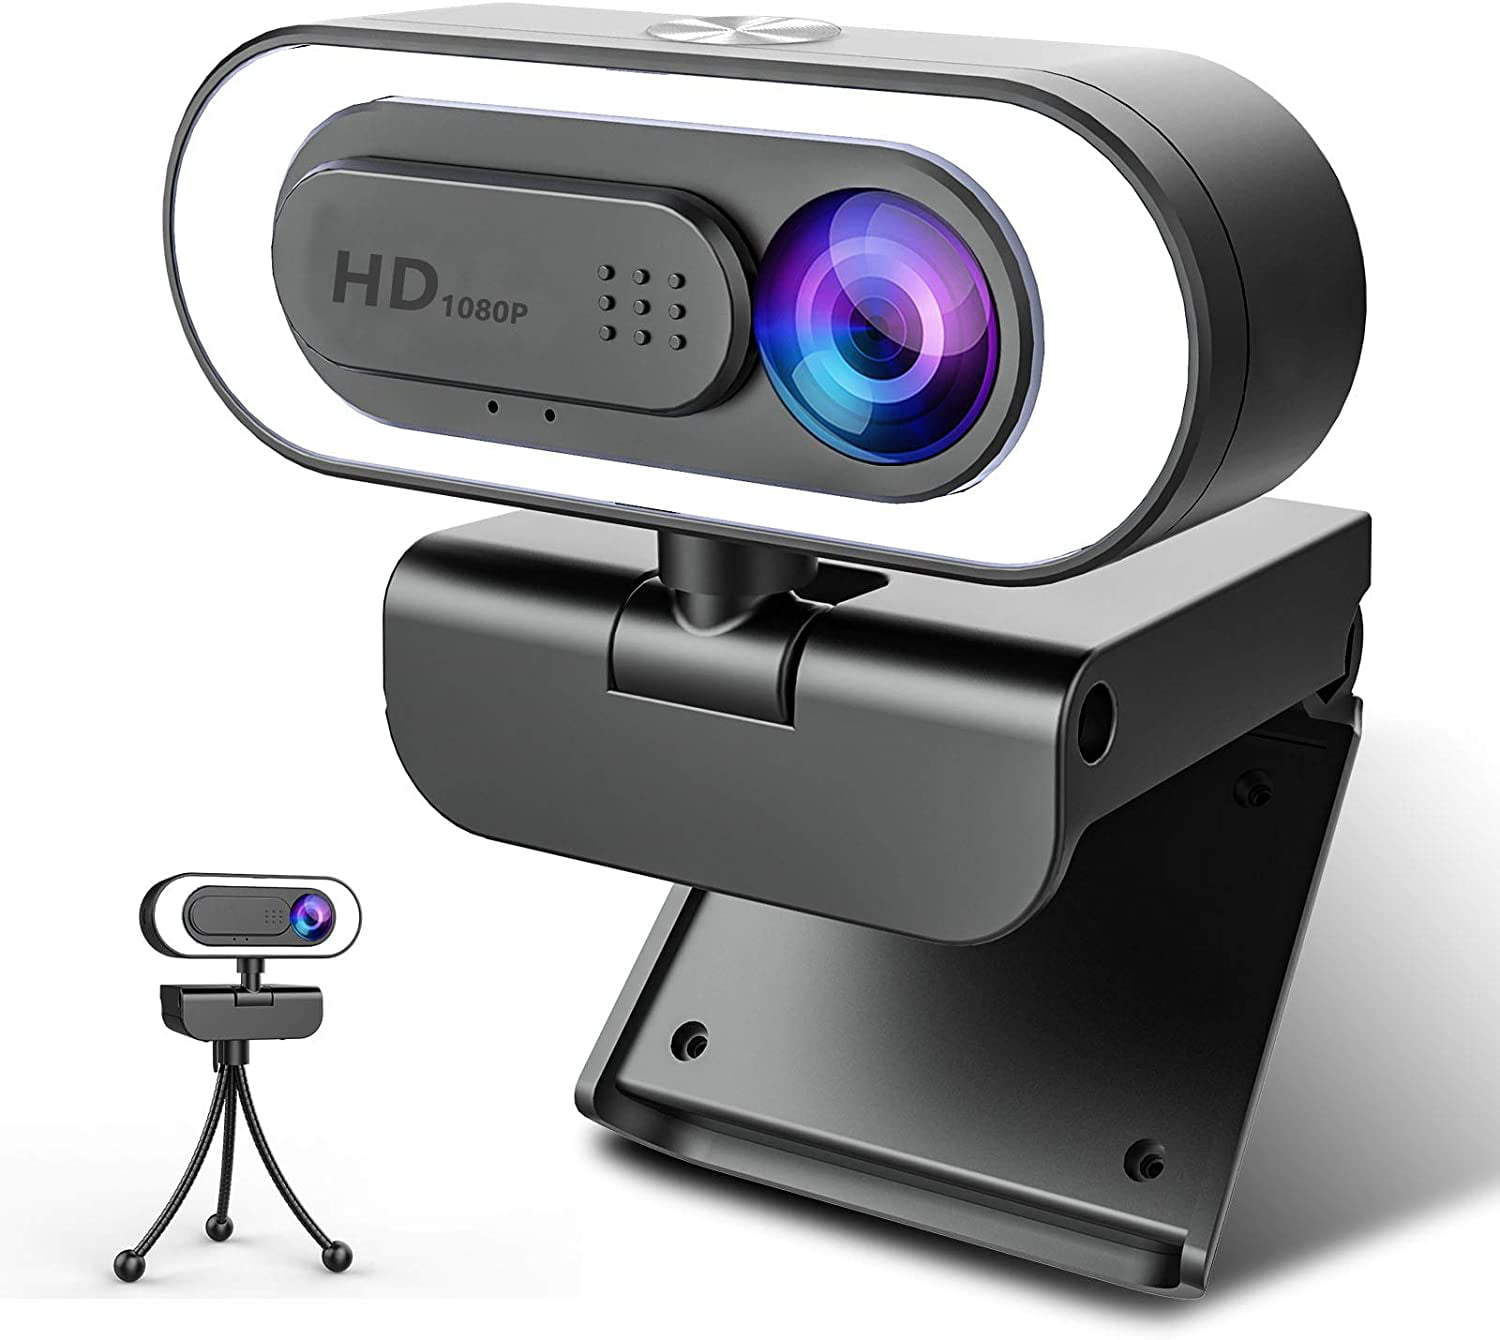 Zoom PC/Mac/Laptop/MacBook/Tablet Hangouts FaceTime Full HD 1080P Webcam Built-in Mic and Drive-Free USB Web Camera for Skype